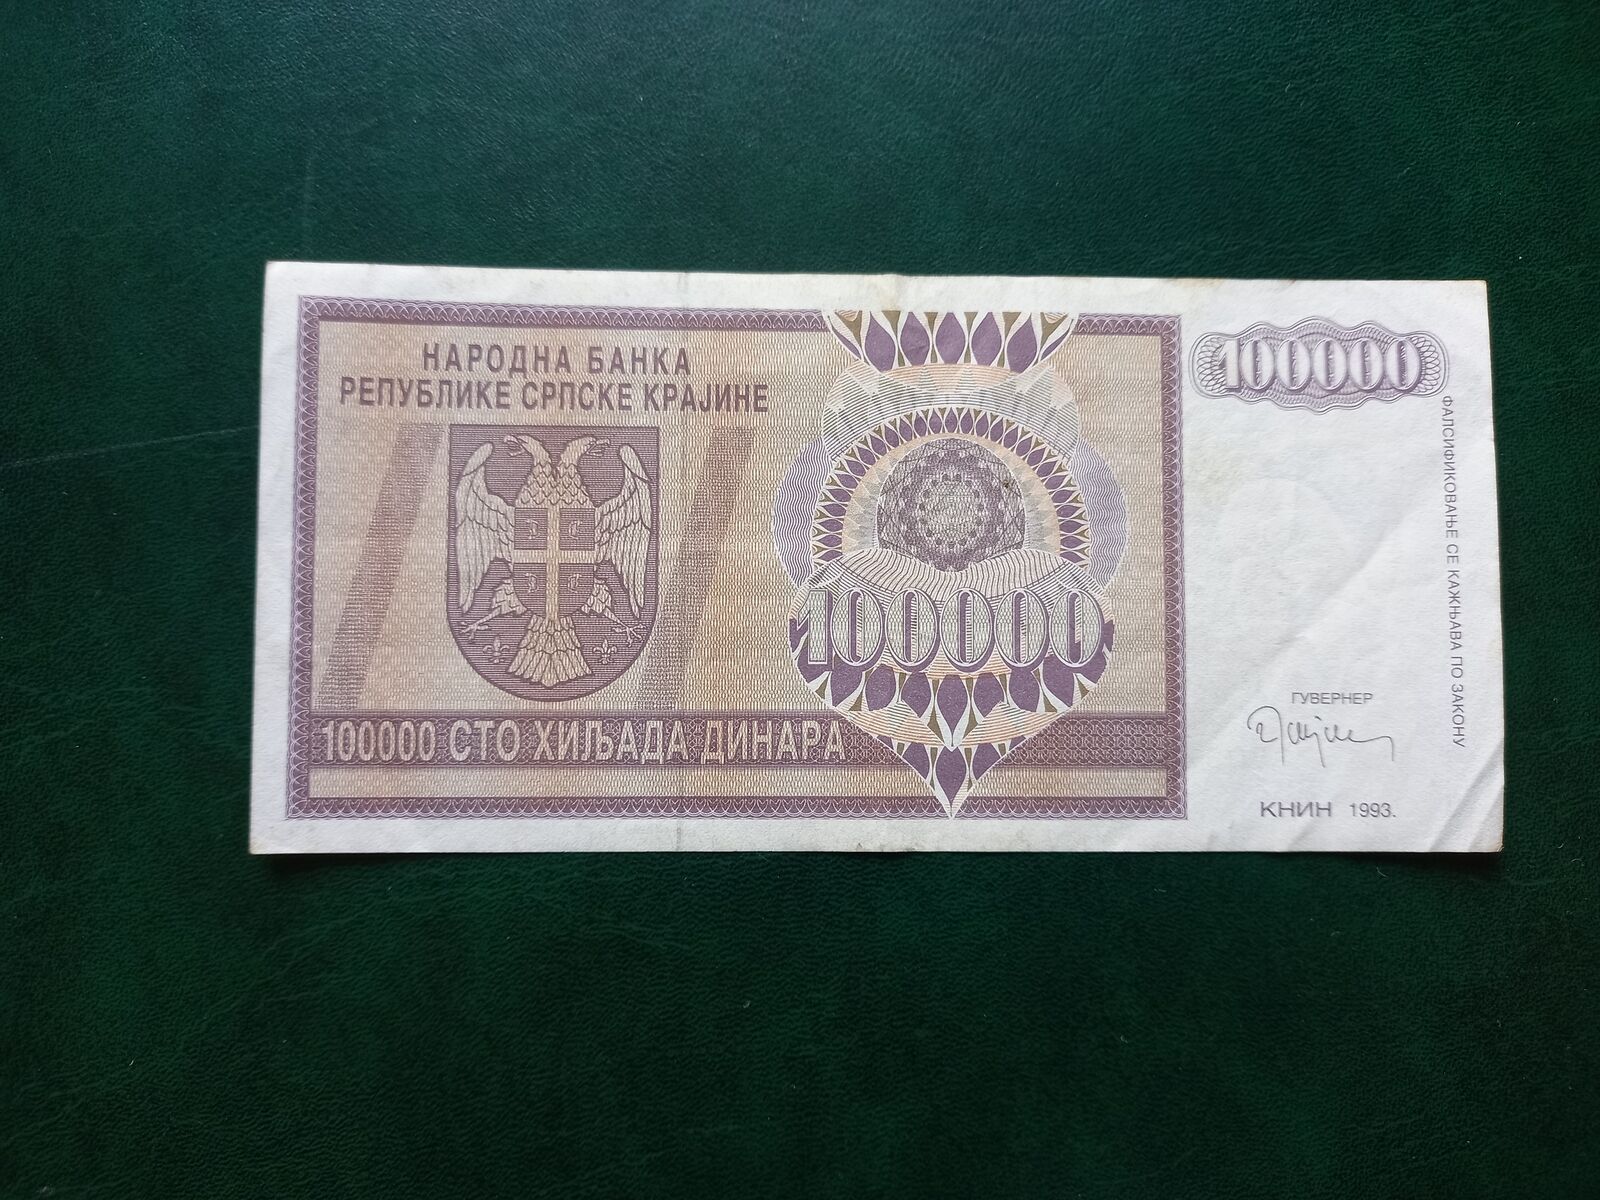 Croatia Krajina 100000 Dinara Banknote - Knin 1993